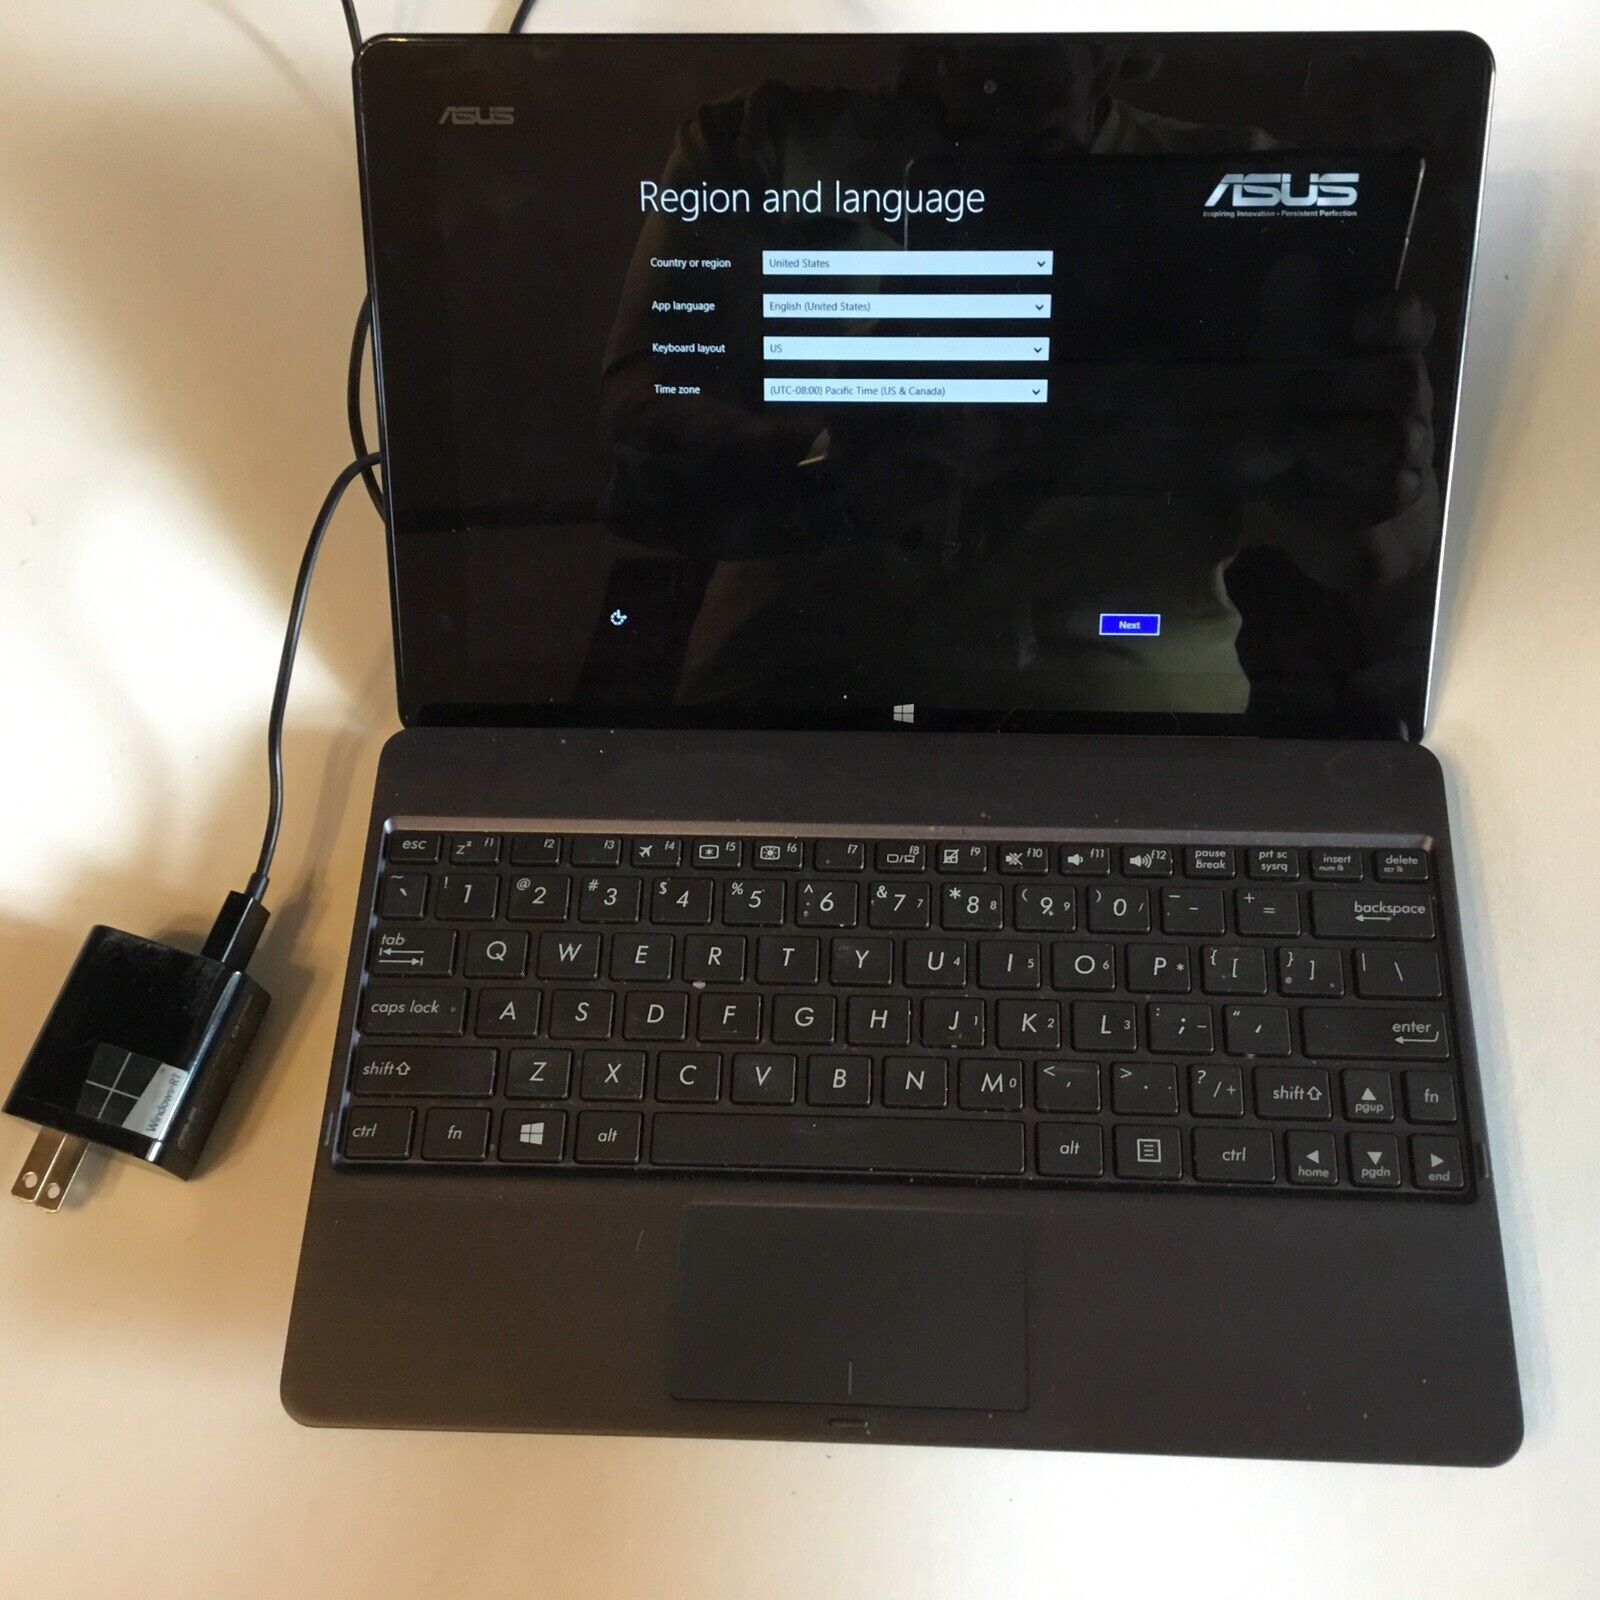 ASUS VivoTab RT TF600T-B1-GR 10.1-Inch 32 GB Tablet Gray 2012 Model Tested